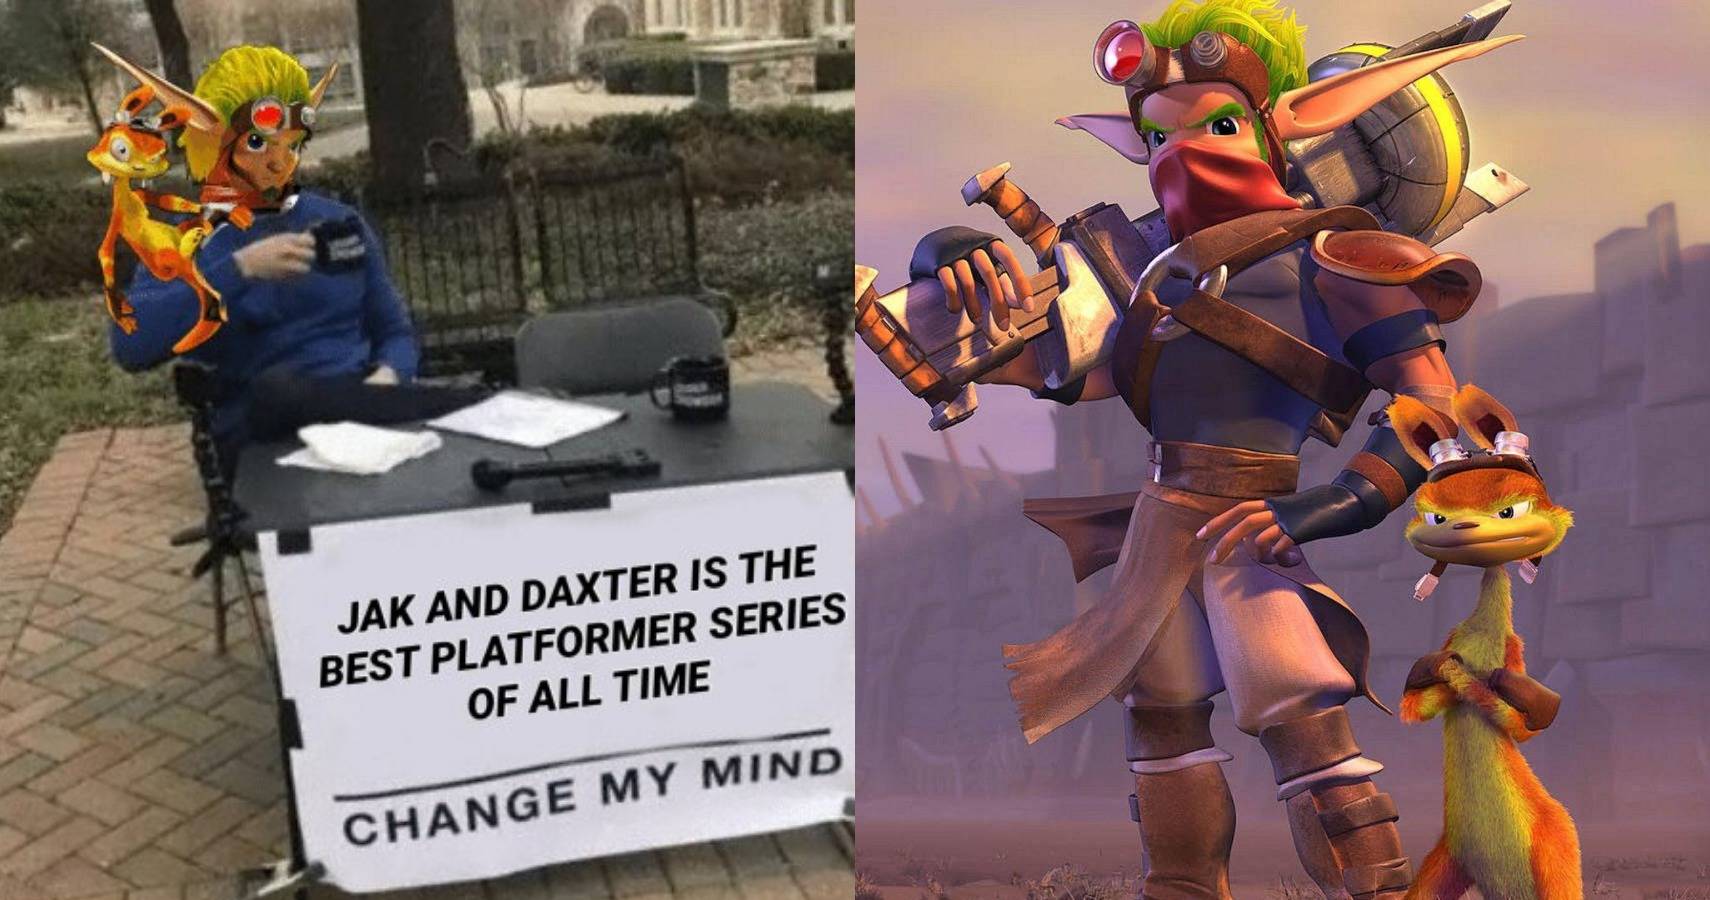 Jak and daxter meme